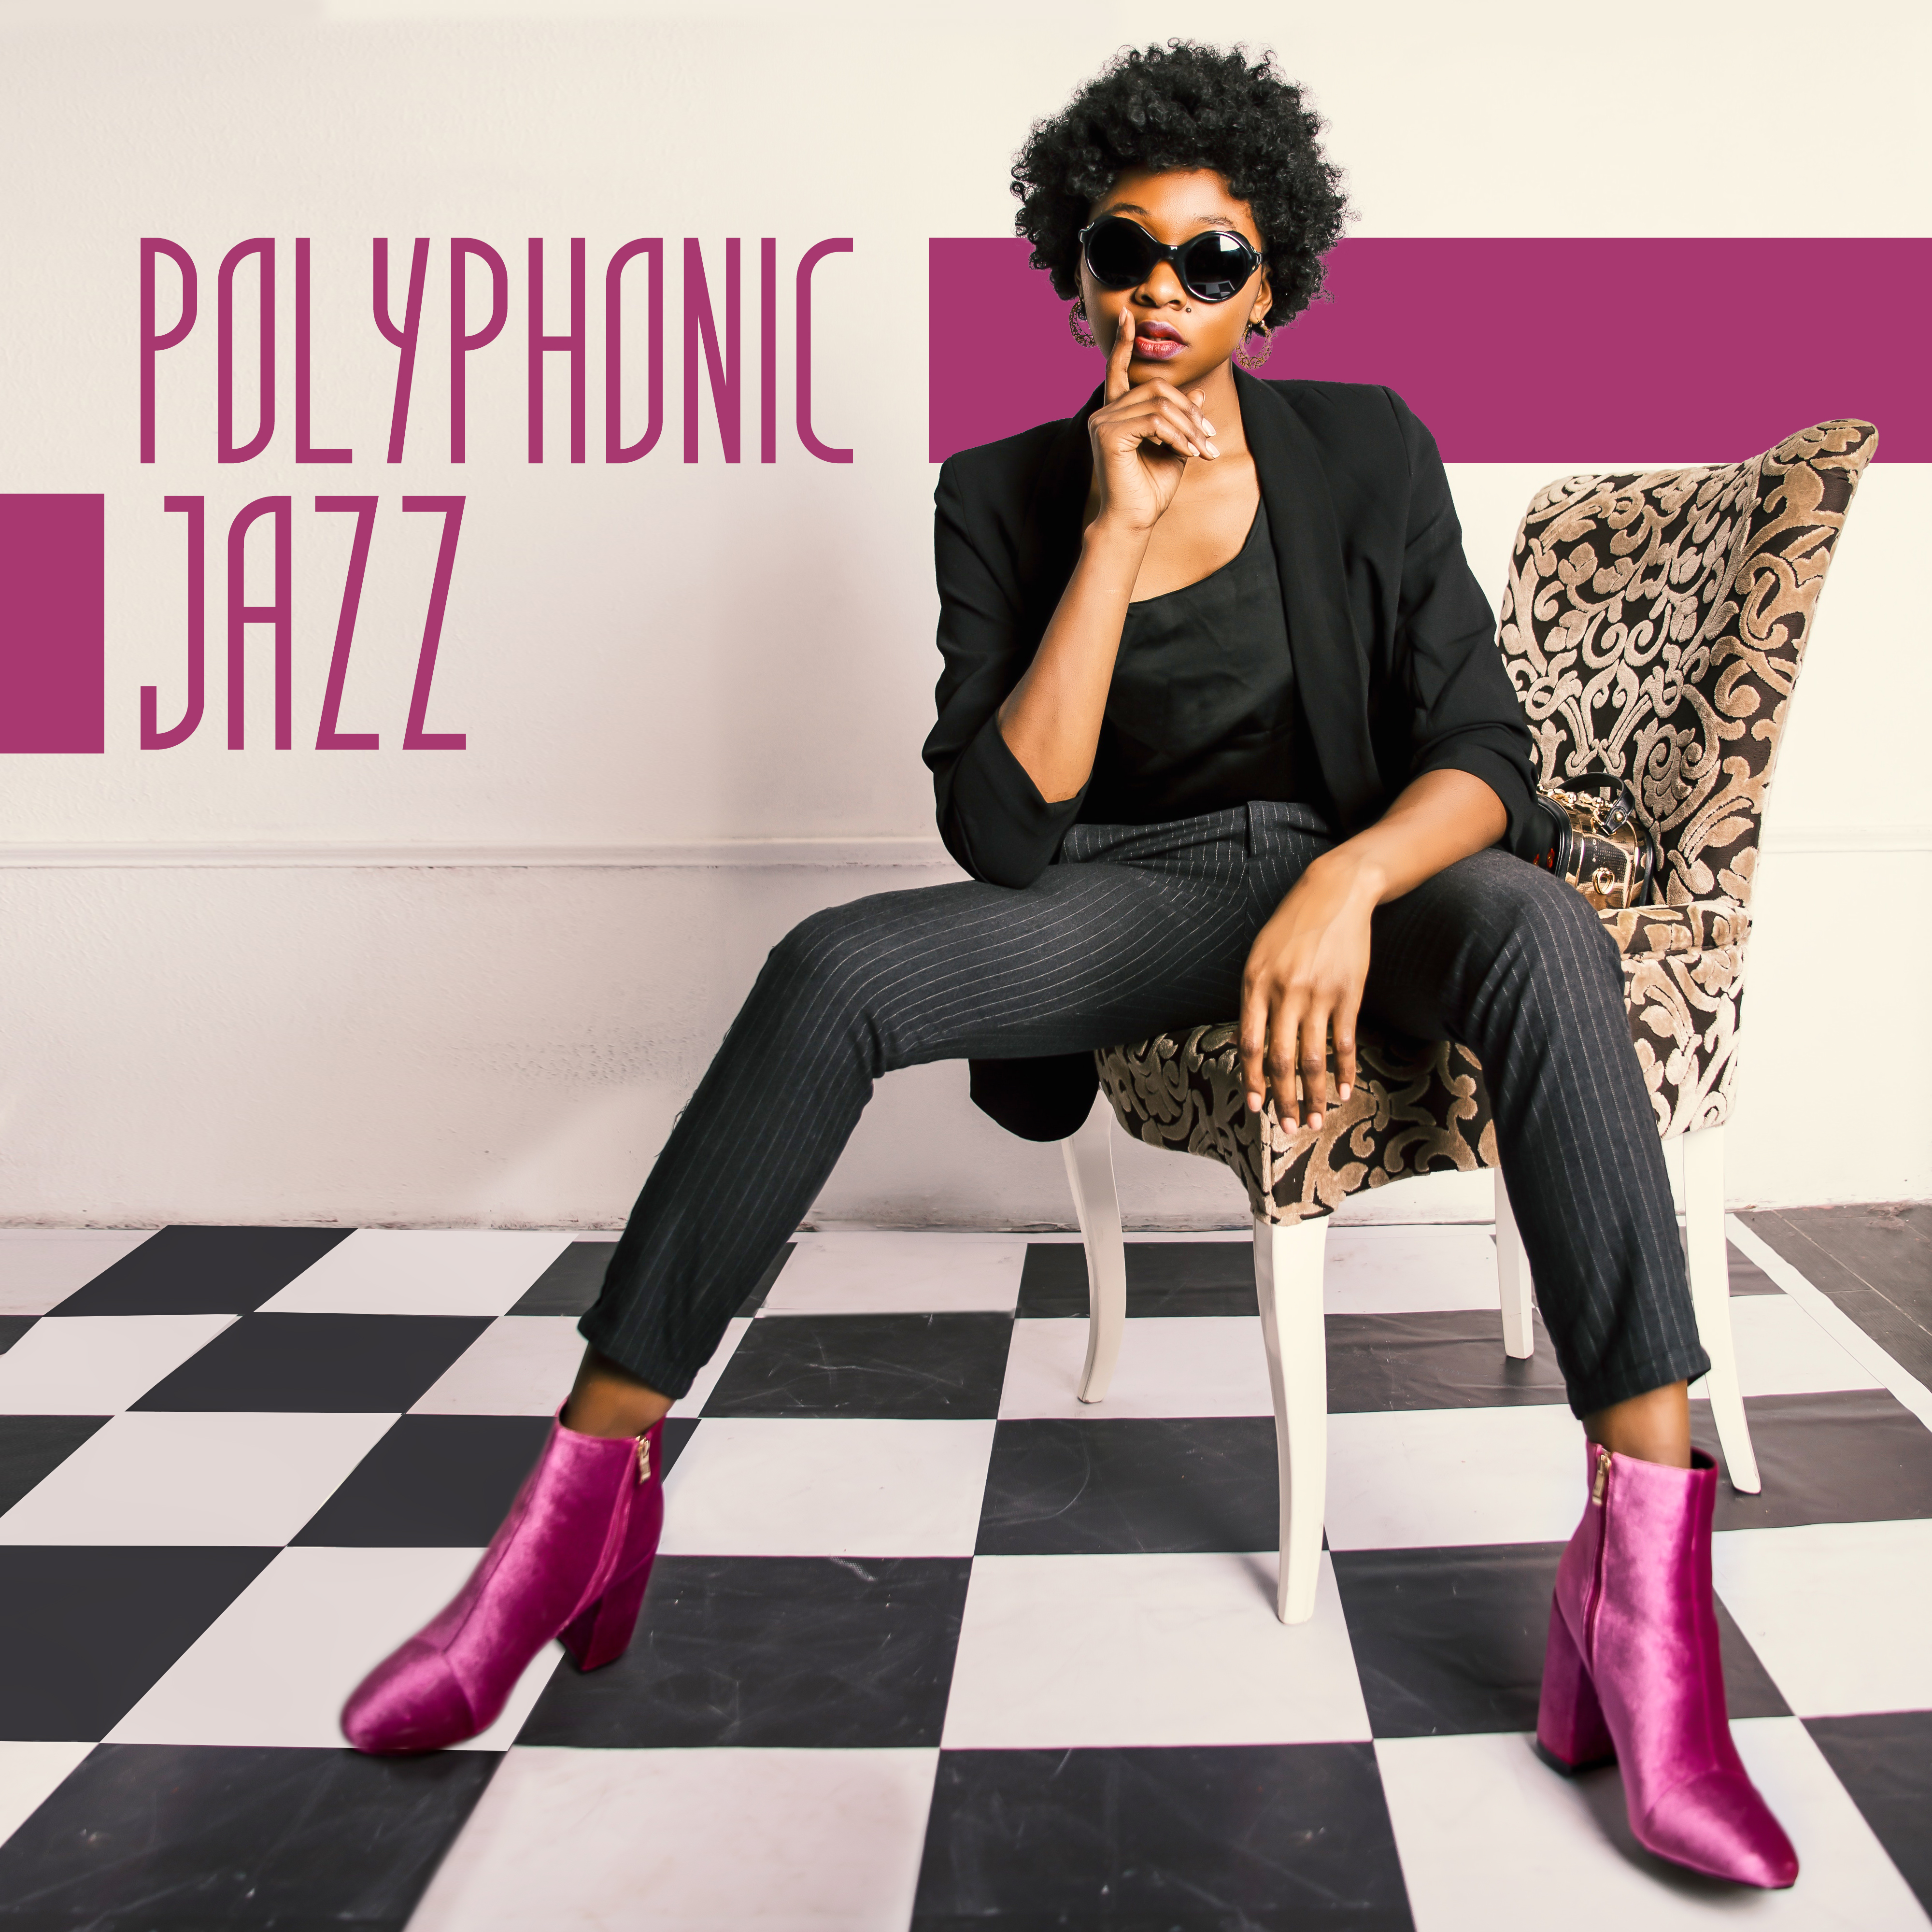 Polyphonic Jazz